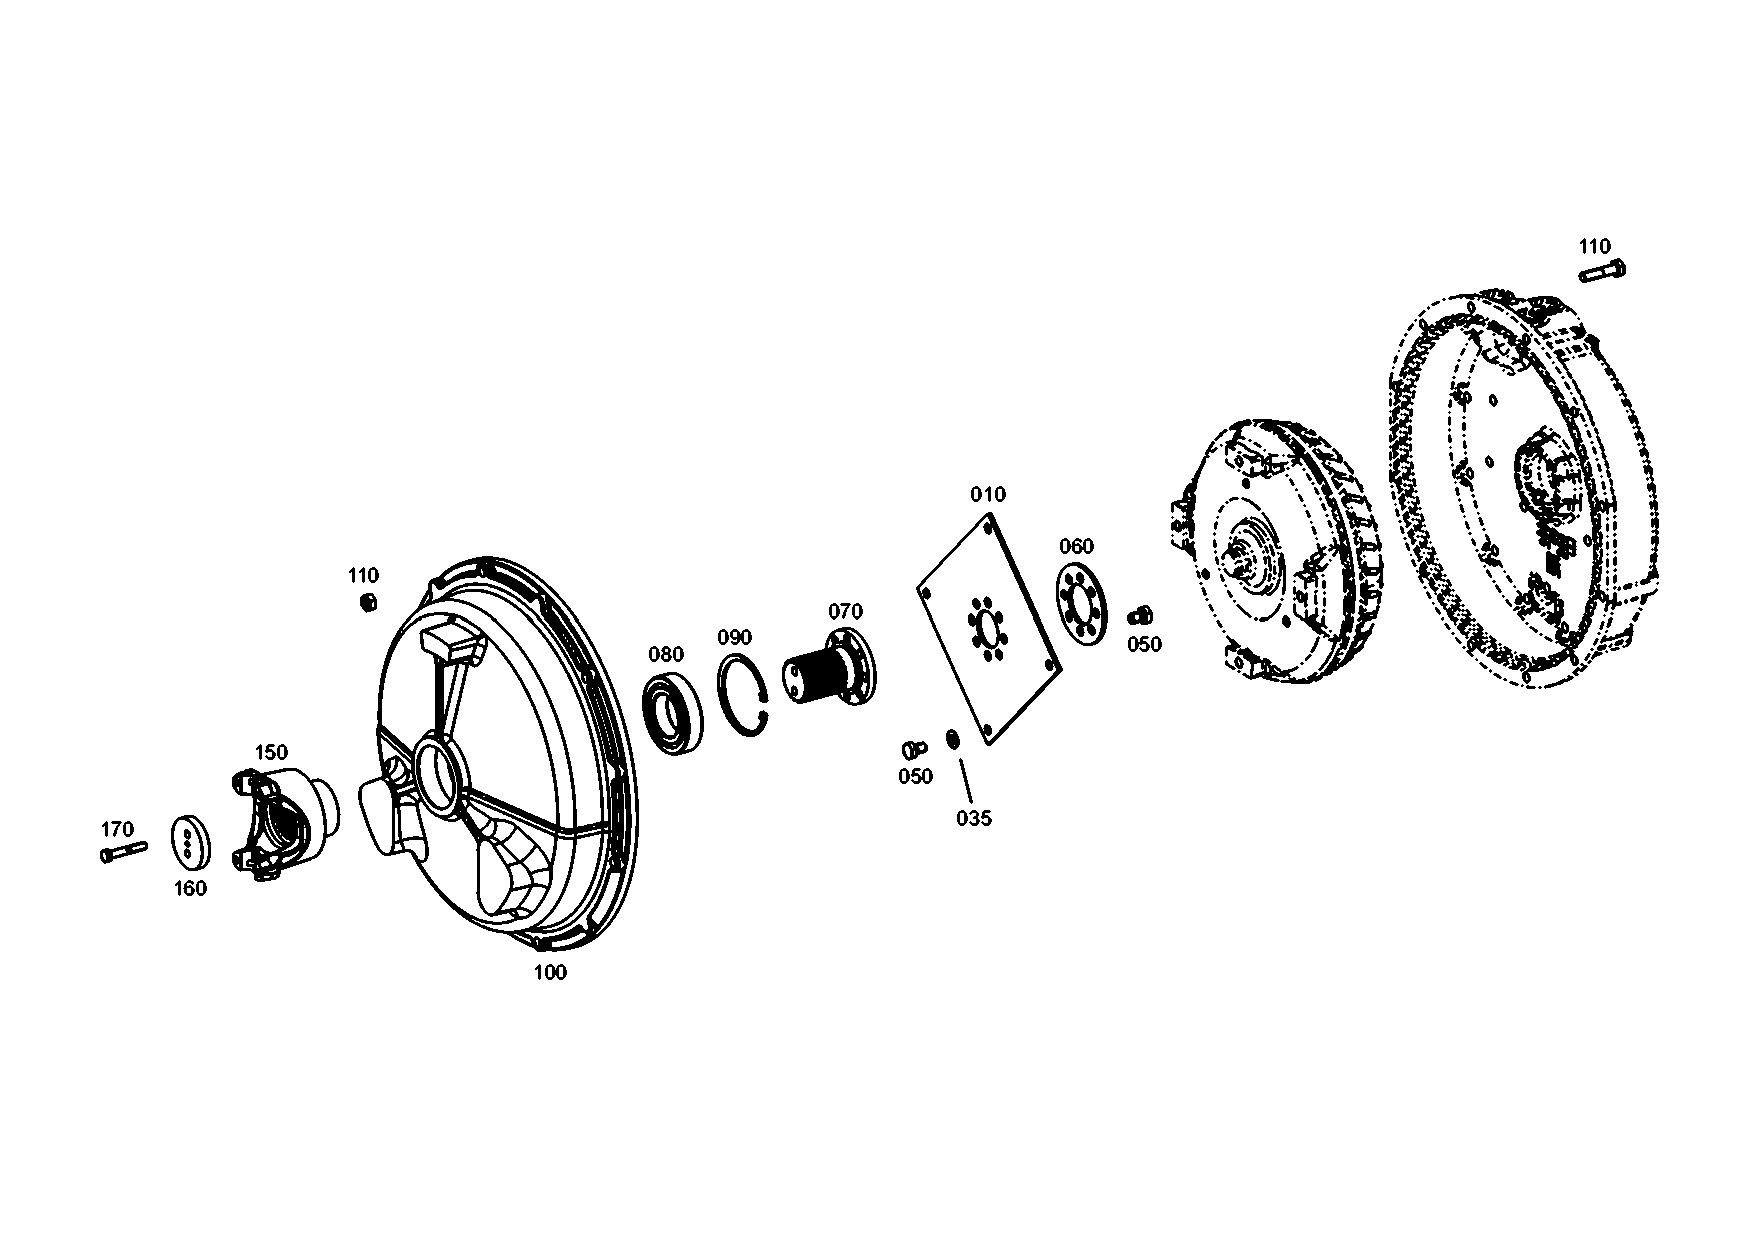 drawing for SCHOPF MASCHINENBAU GMBH 13909 - DIAPHRAGM (figure 5)